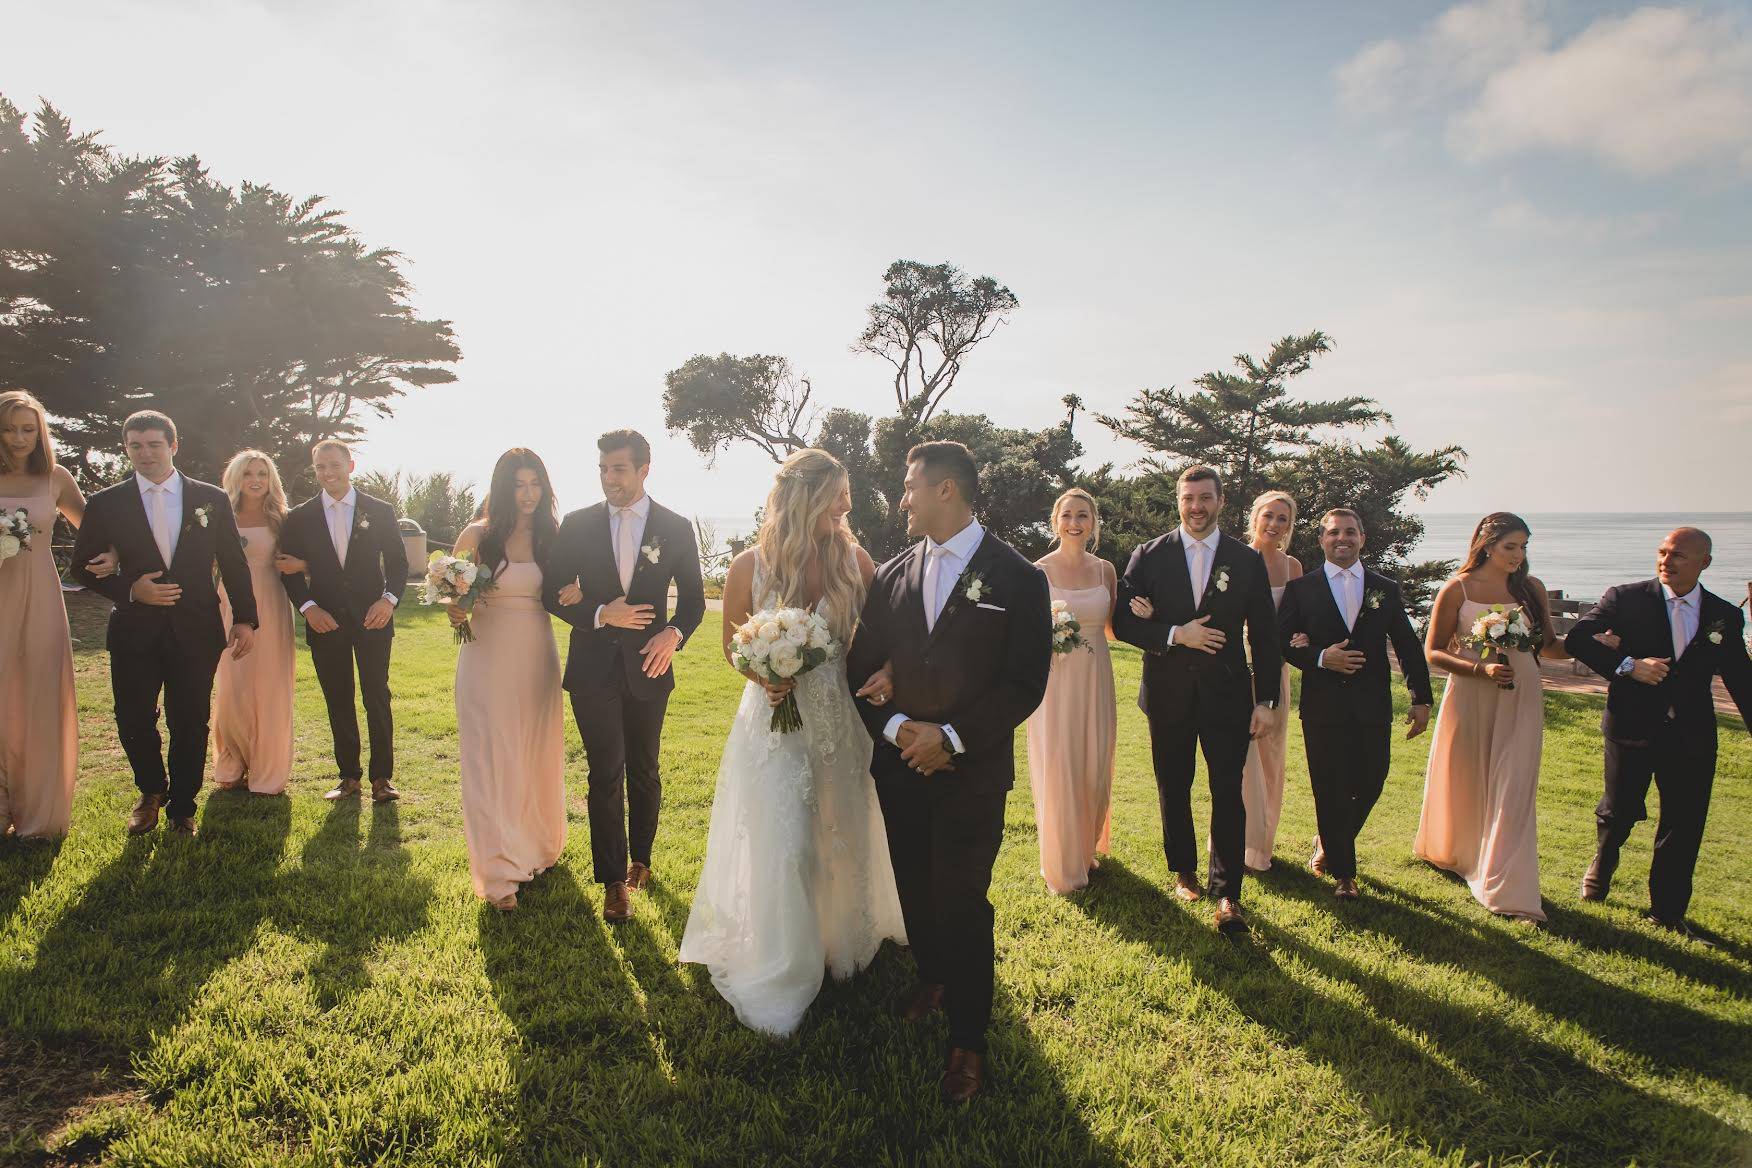 Beach Formal Wedding Attire for Men - Explained